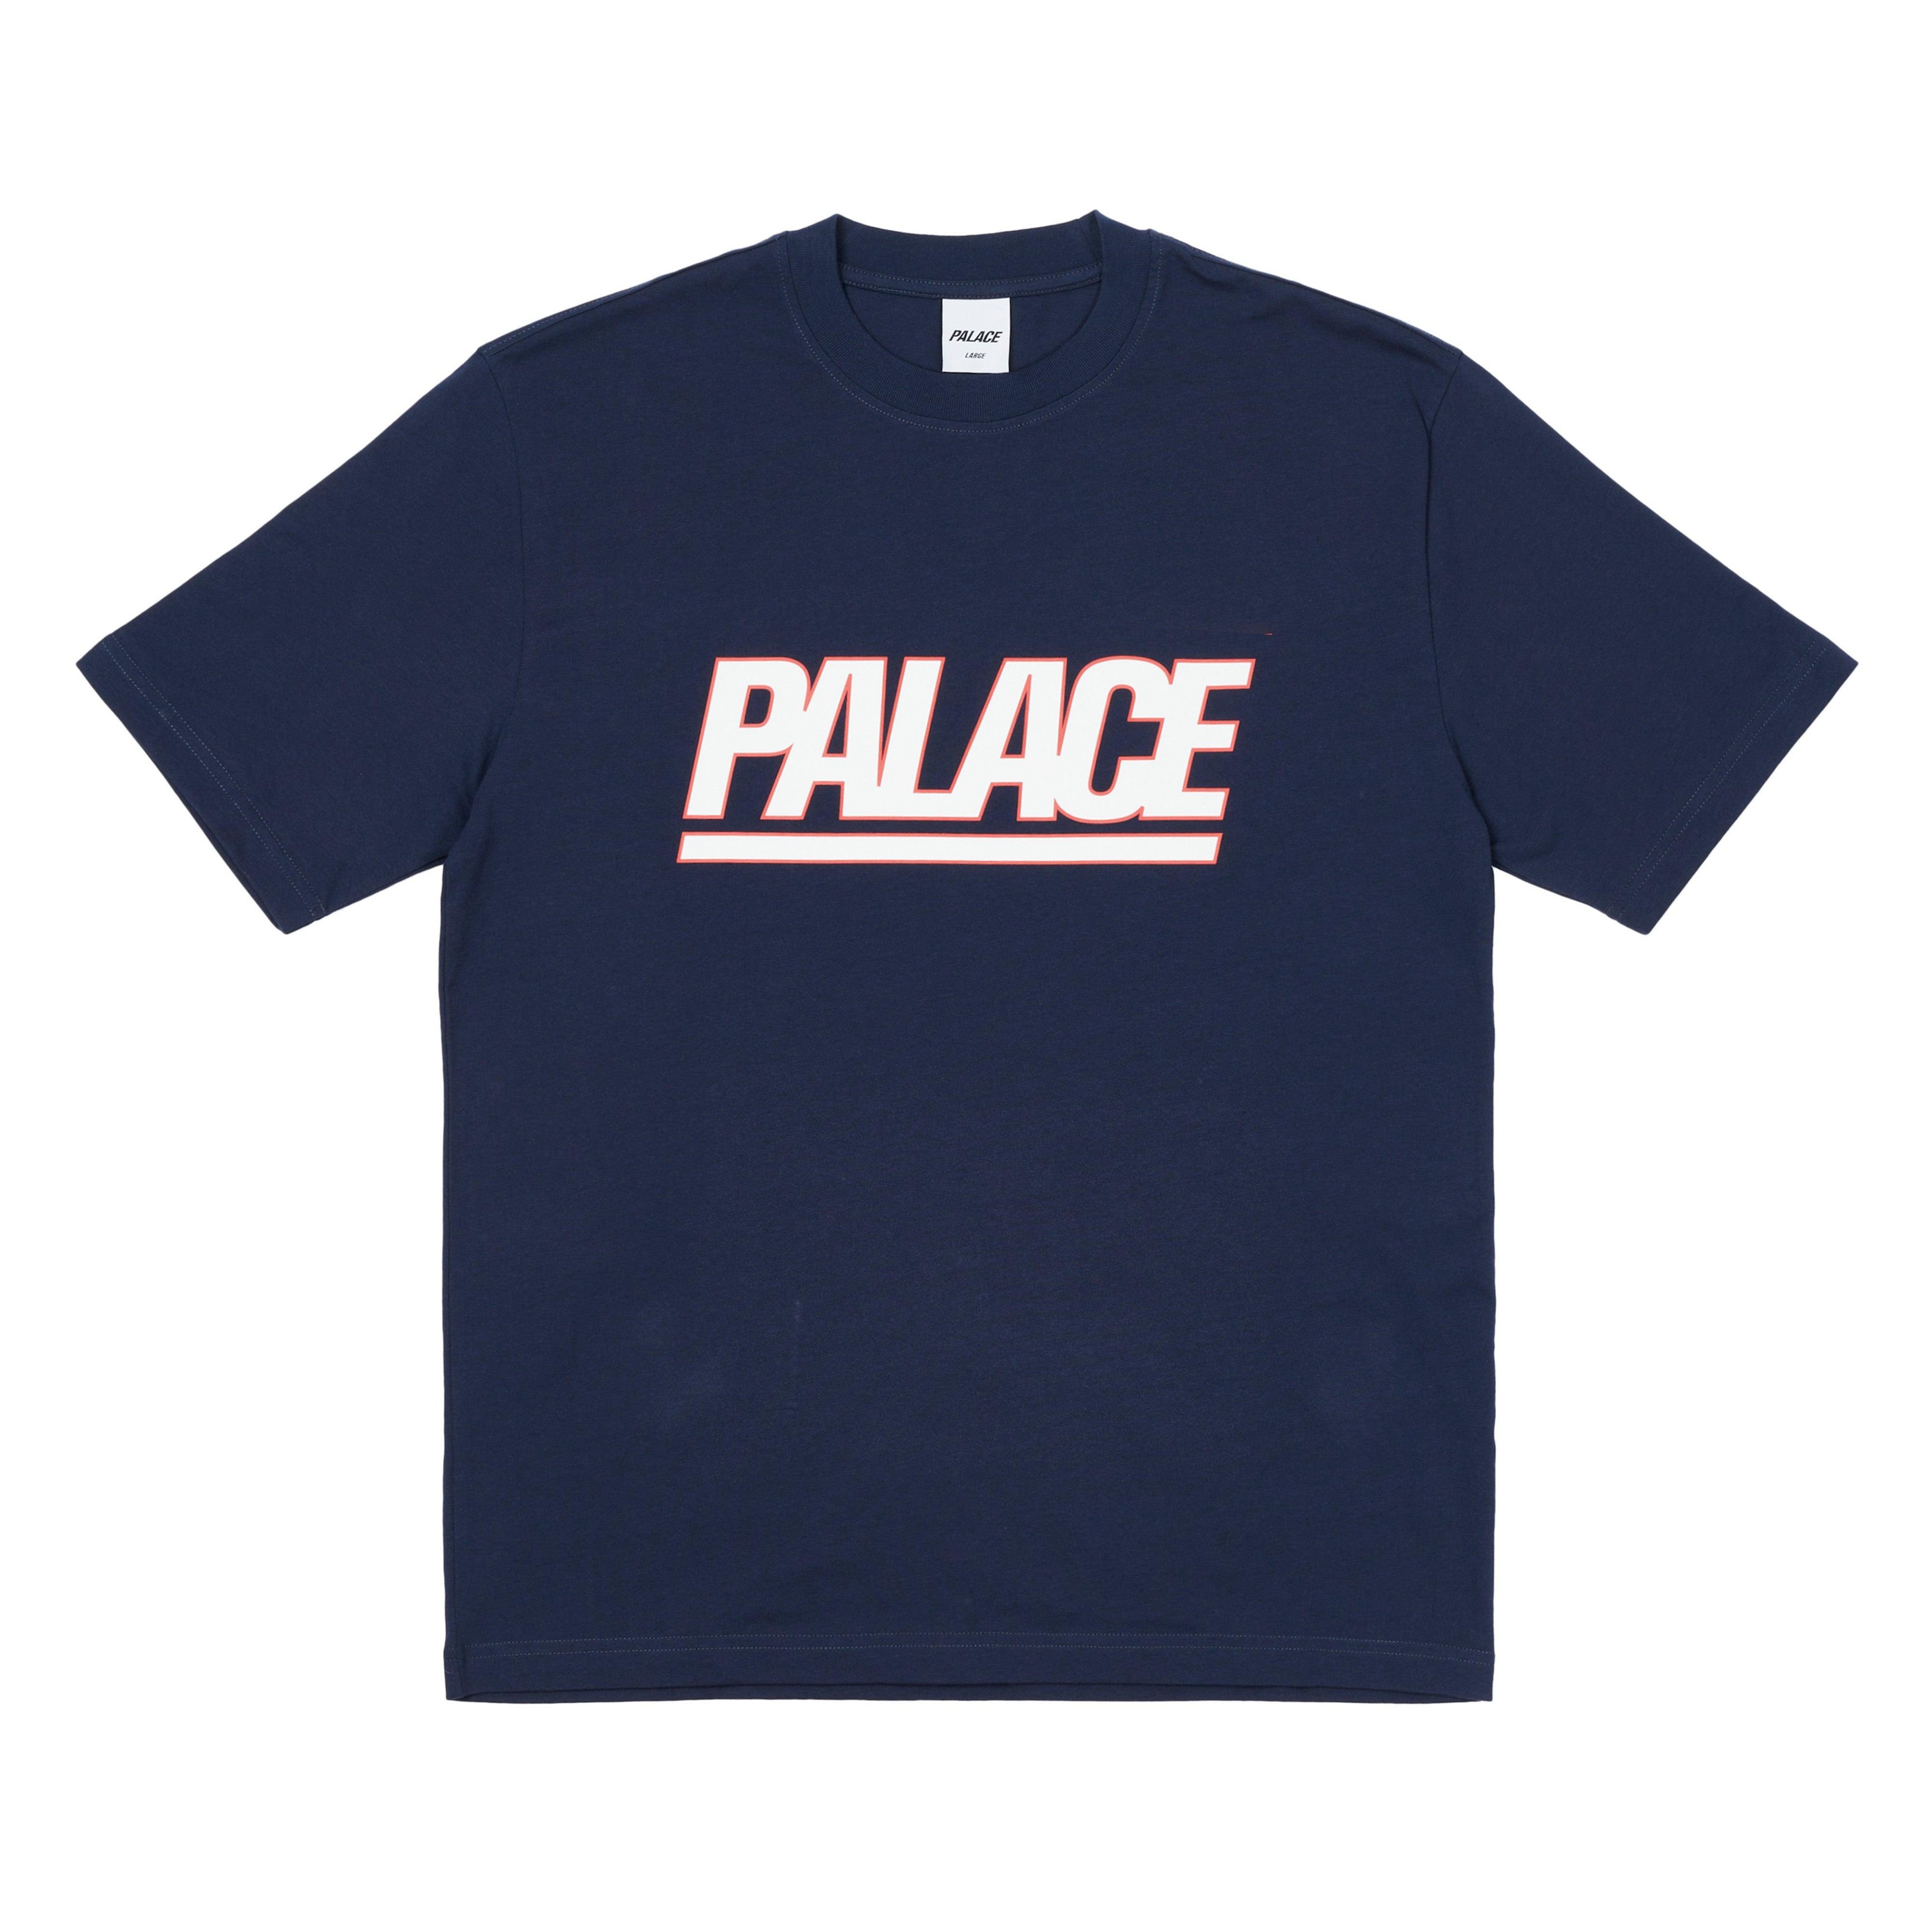 Palace - Gigantic T-Shirt - (Navy) by PALACE